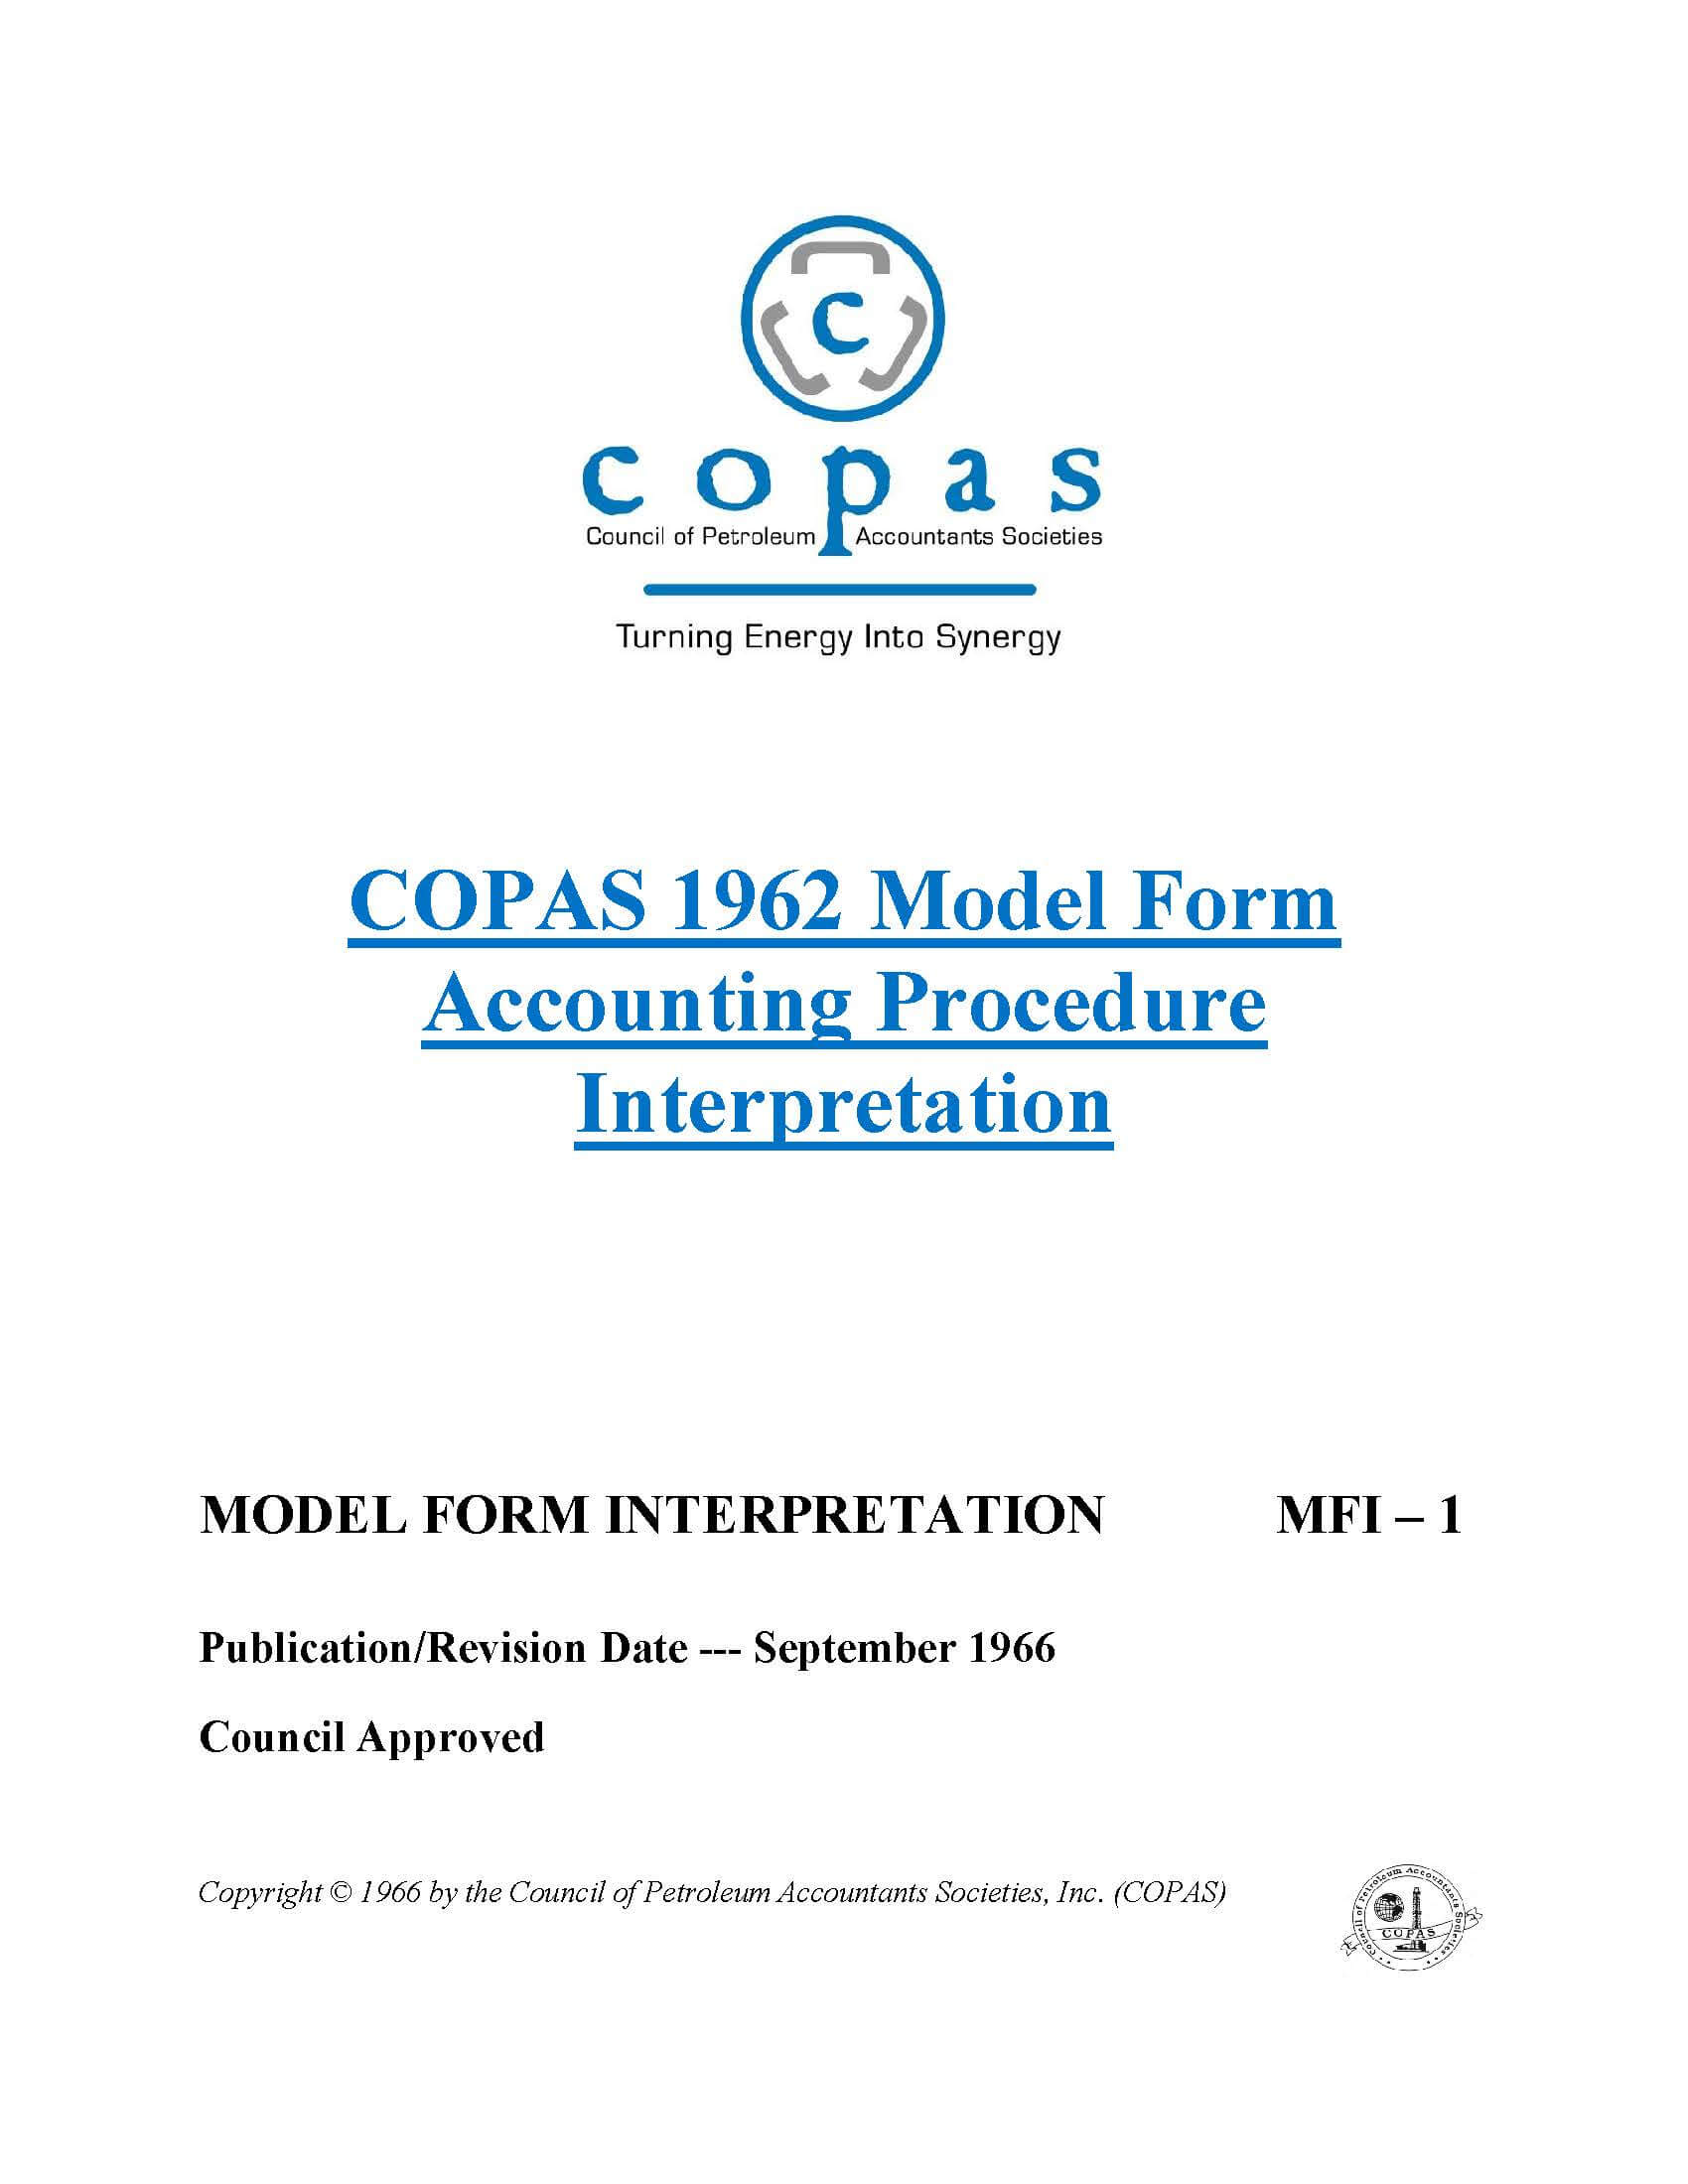 MFI-1 1962 Model Form Accounting Procedure Interpretation